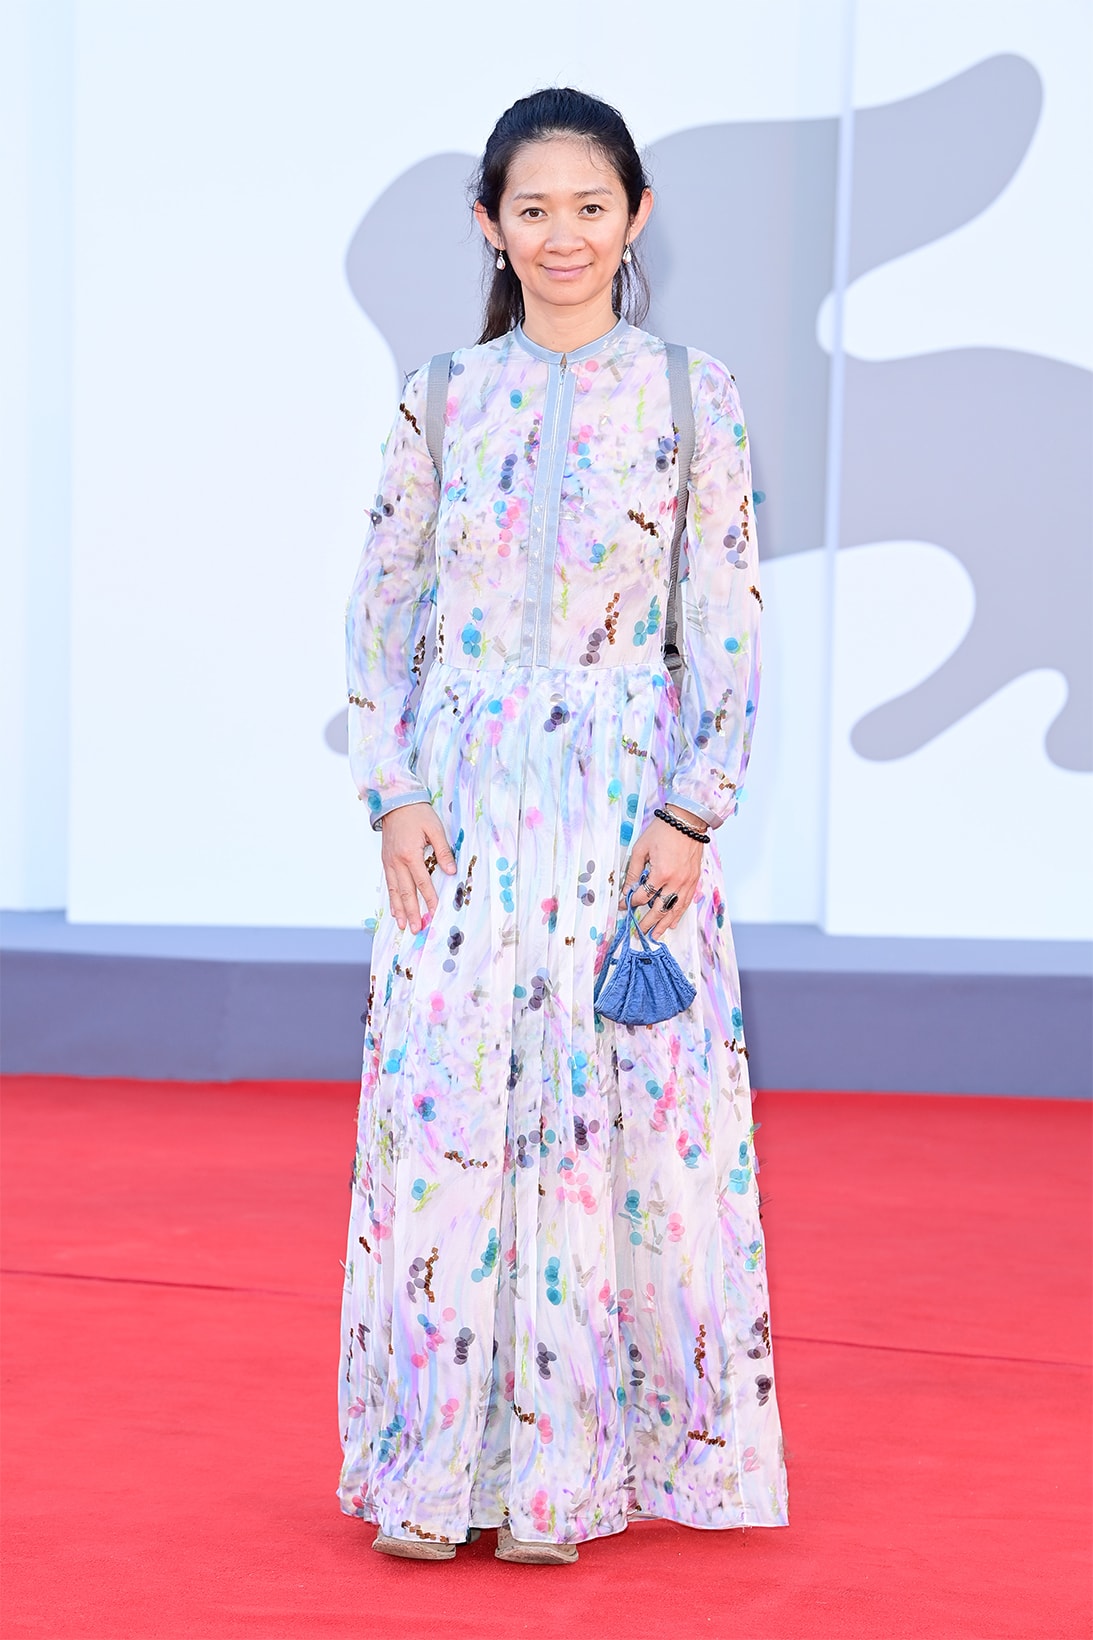 Chloé Zhao 2021 Venice Film Festival Red Carpet Best Dressed Celebrities Style